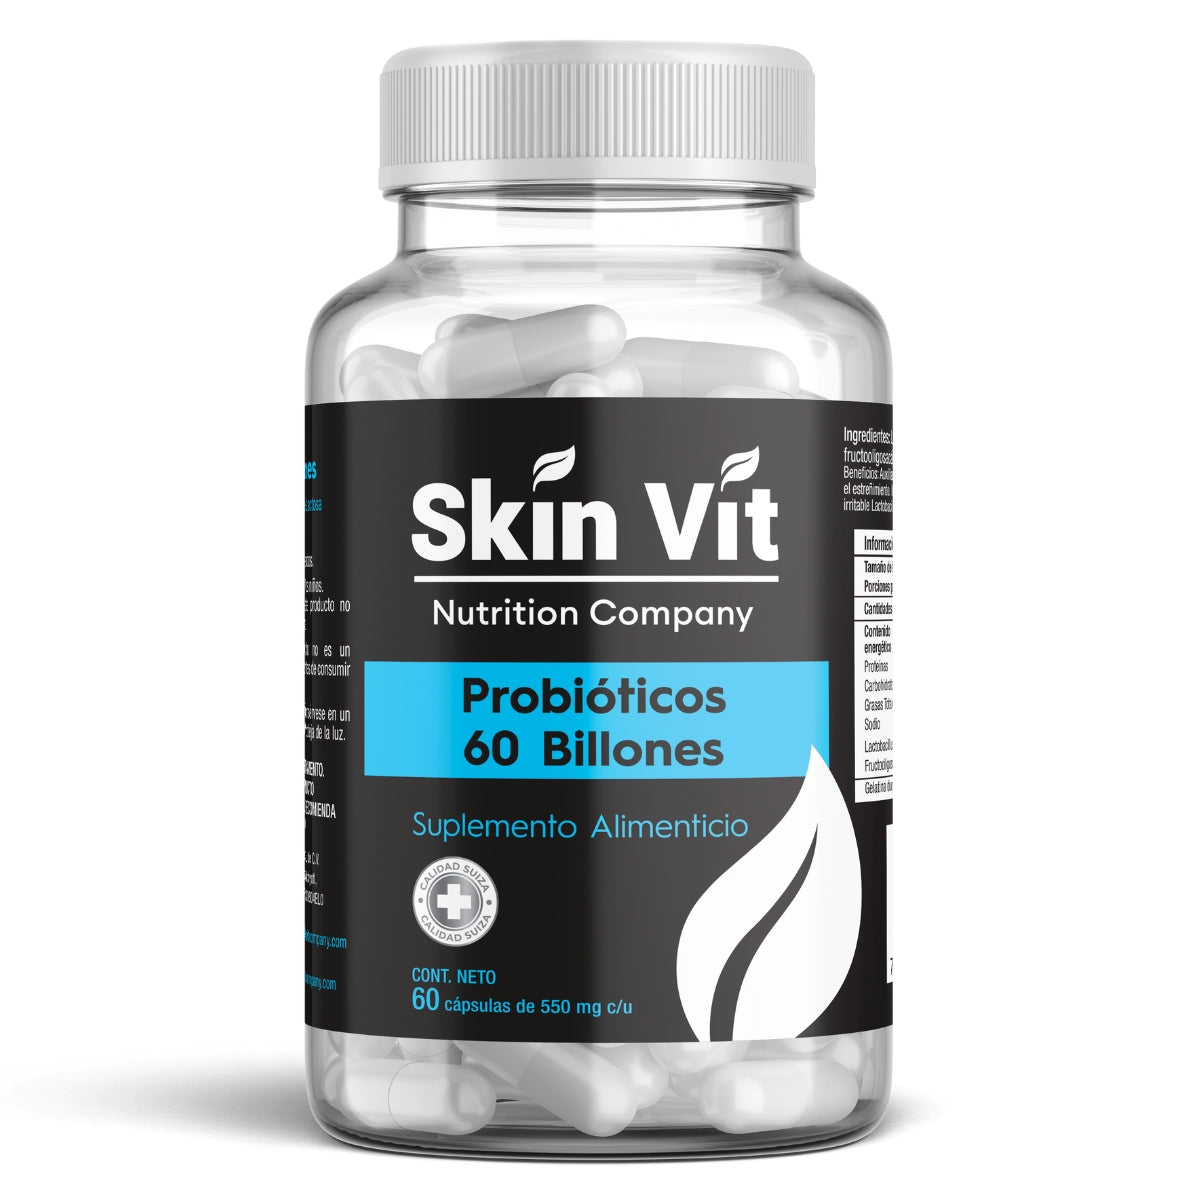 Probioticos Skin Vit 60 Capsulas 550 mg